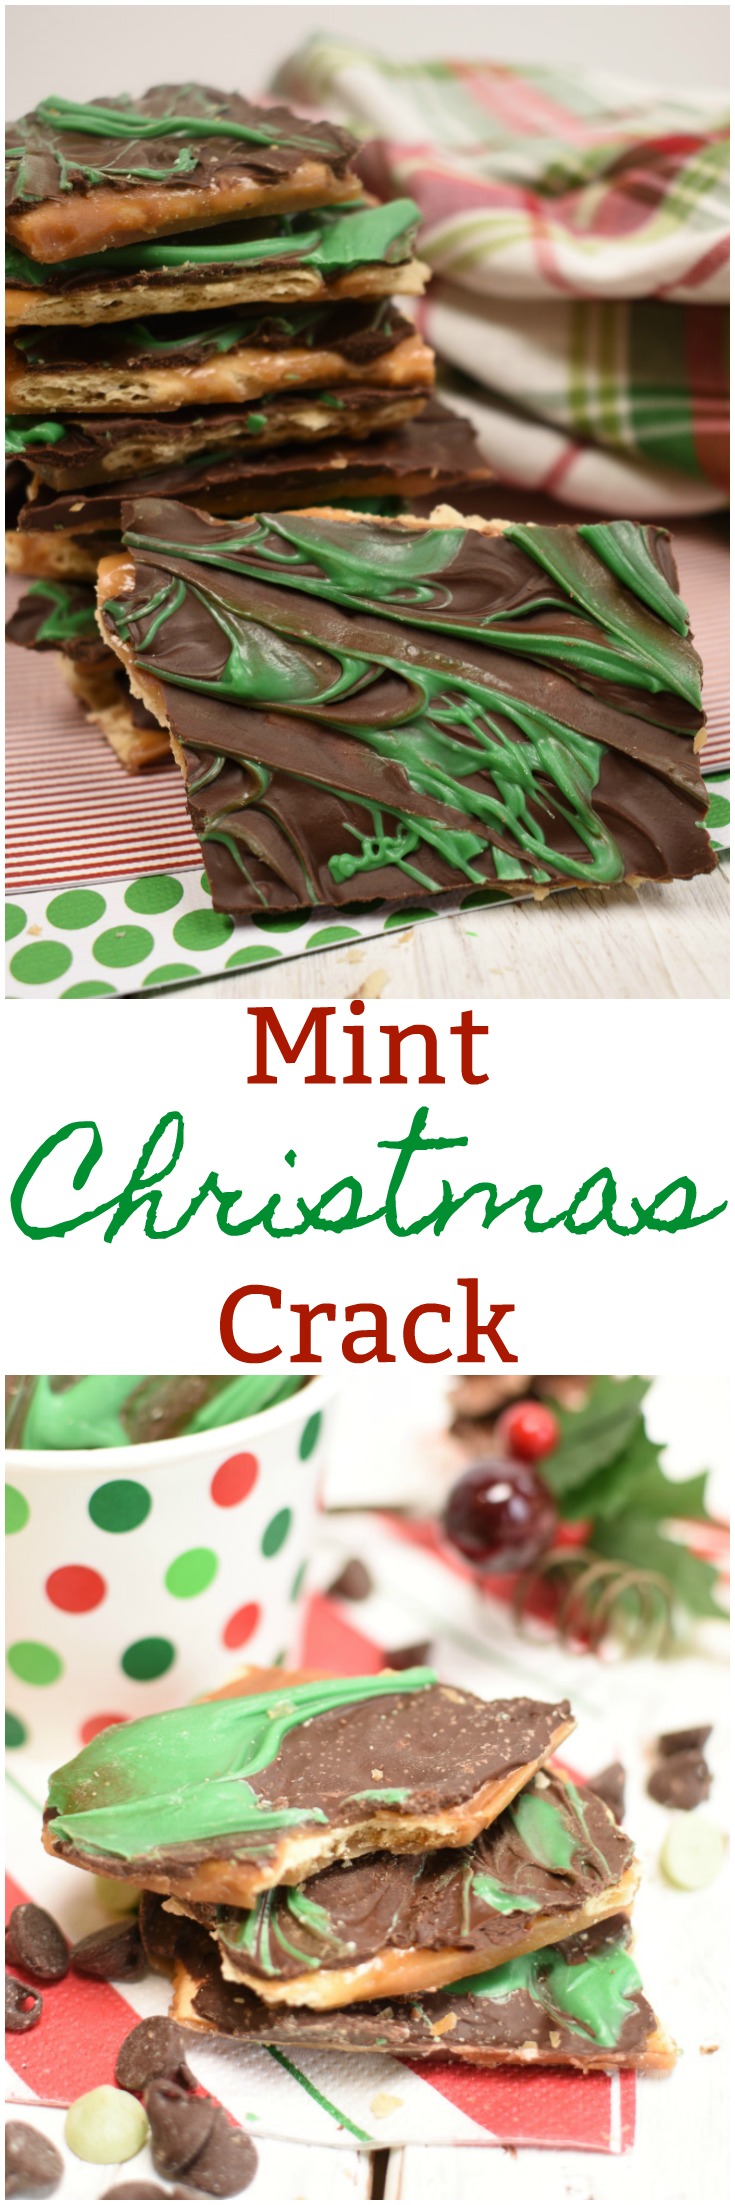 Mint Christmas Crack Recipe - Pitchfork Foodie Farms